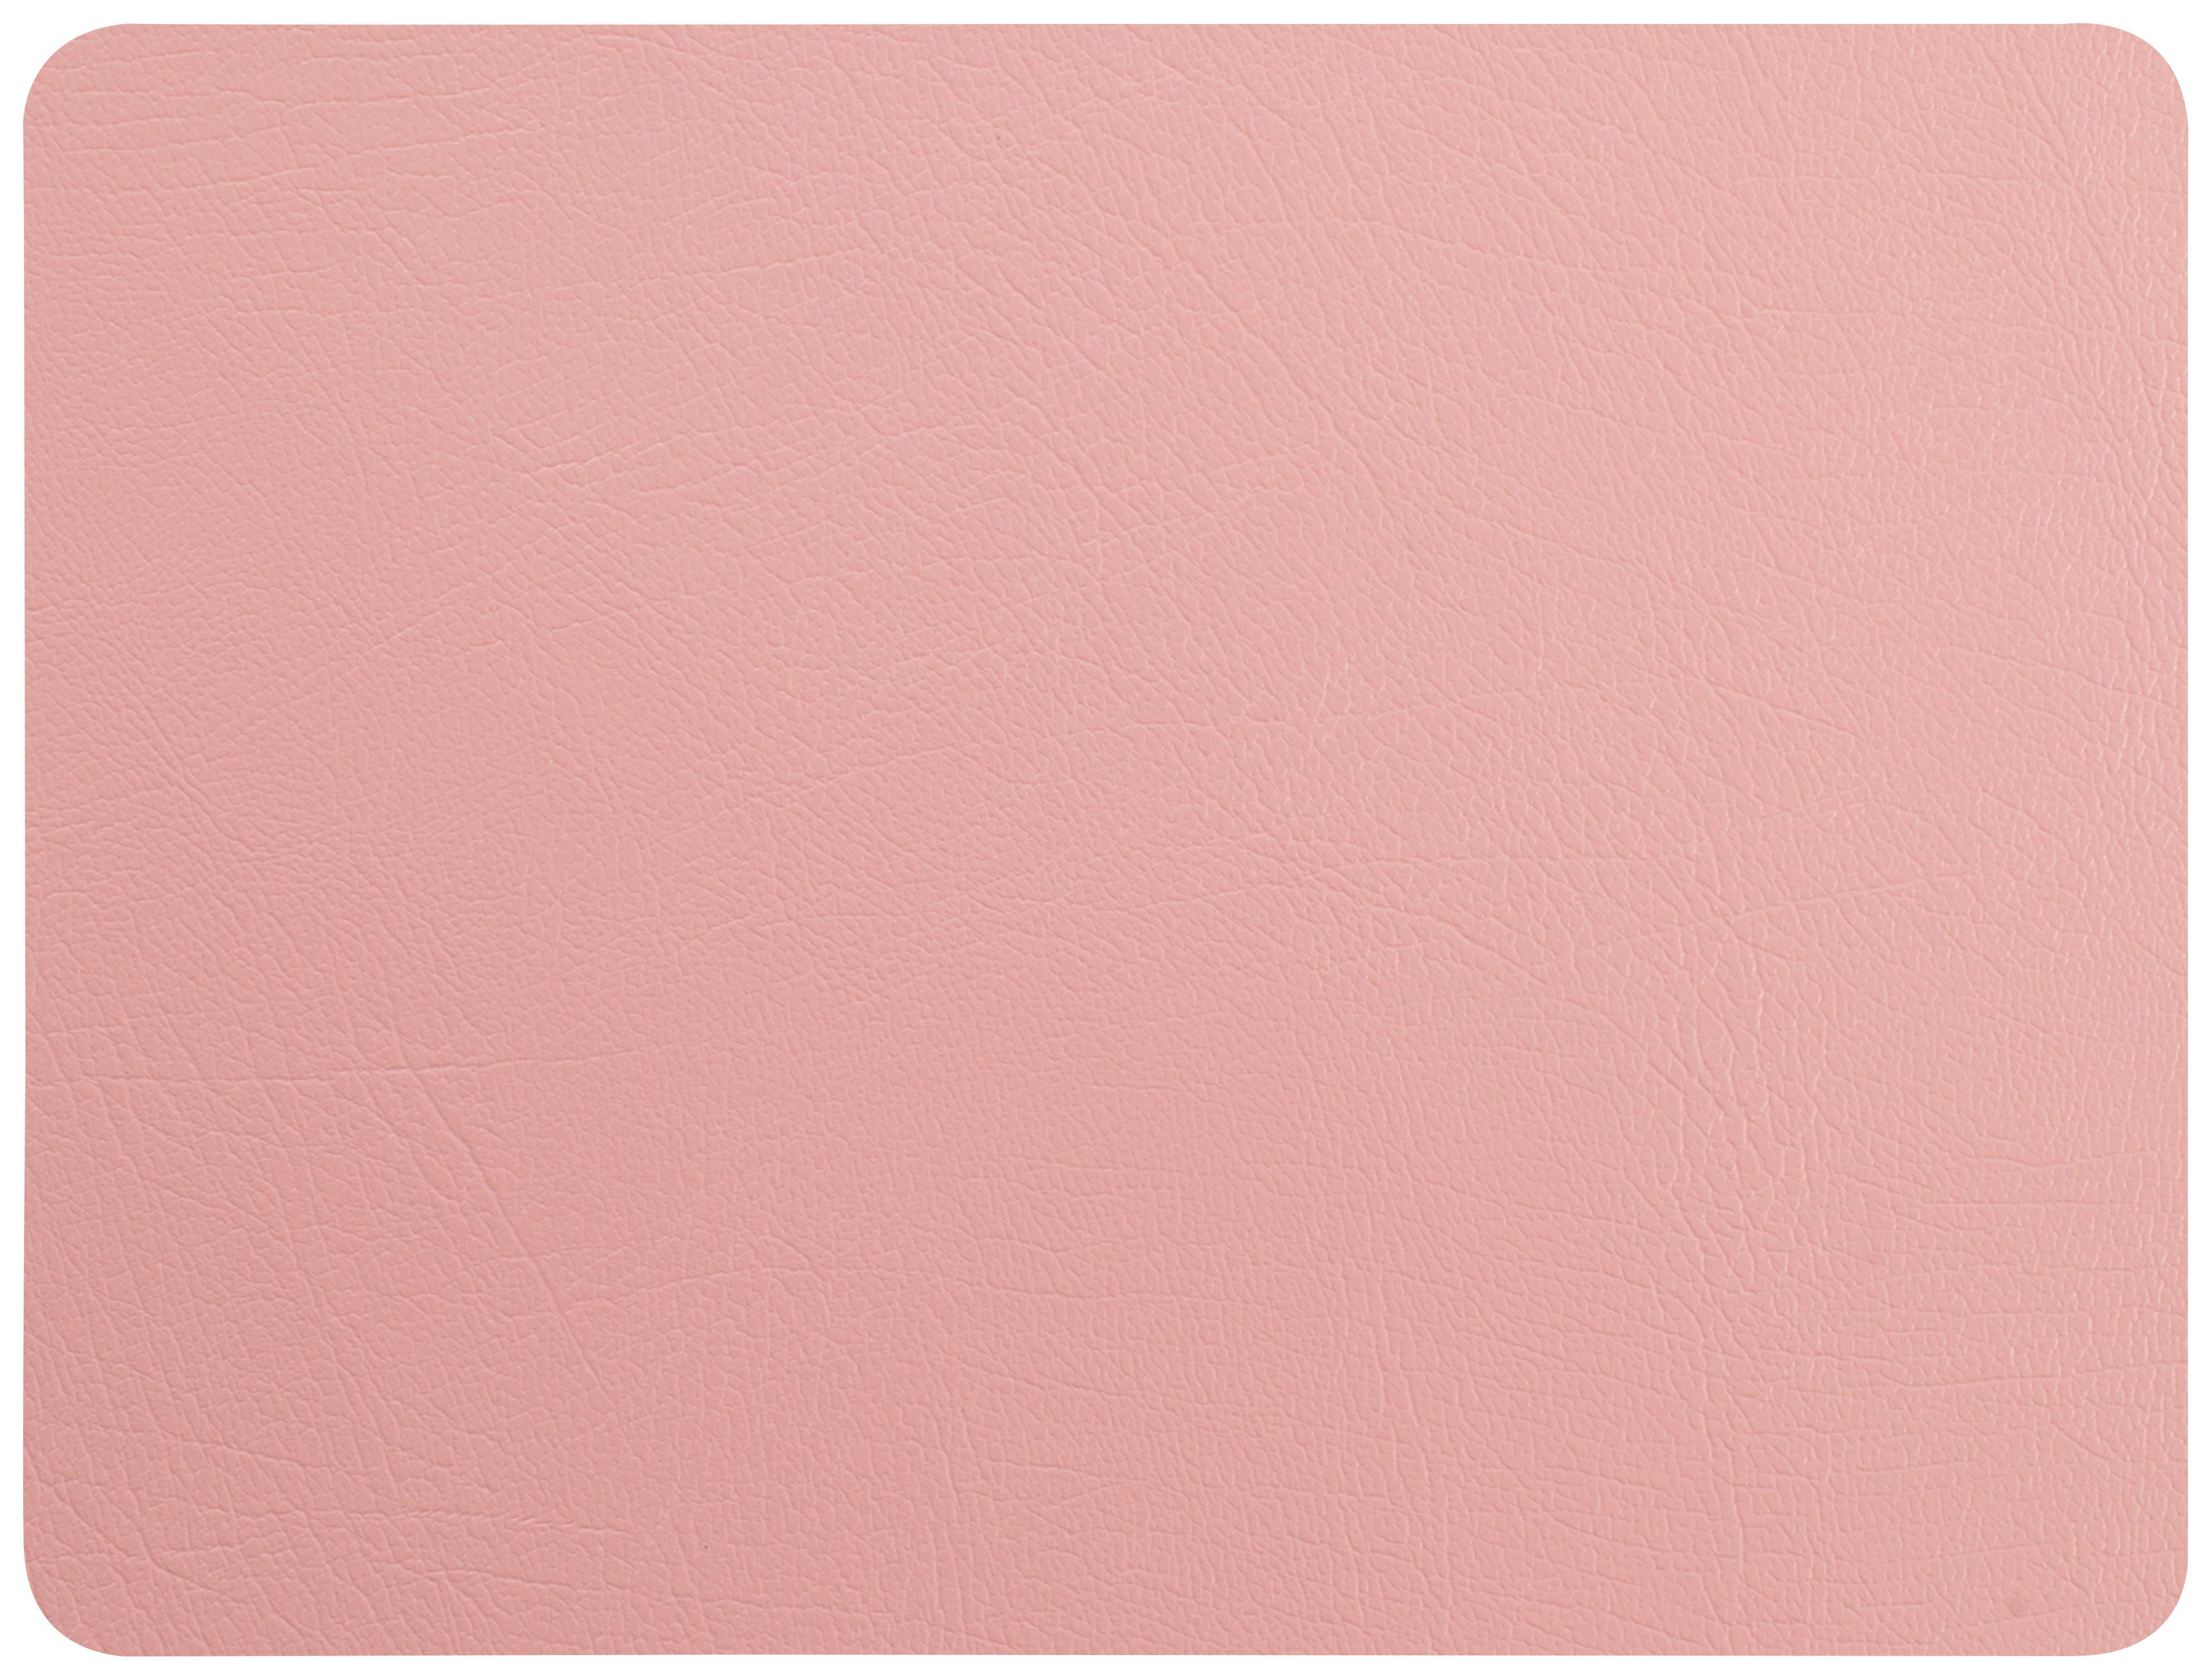 Podmetač Za Stol Jette - ružičasta, koža (33/42cm) - Premium Living